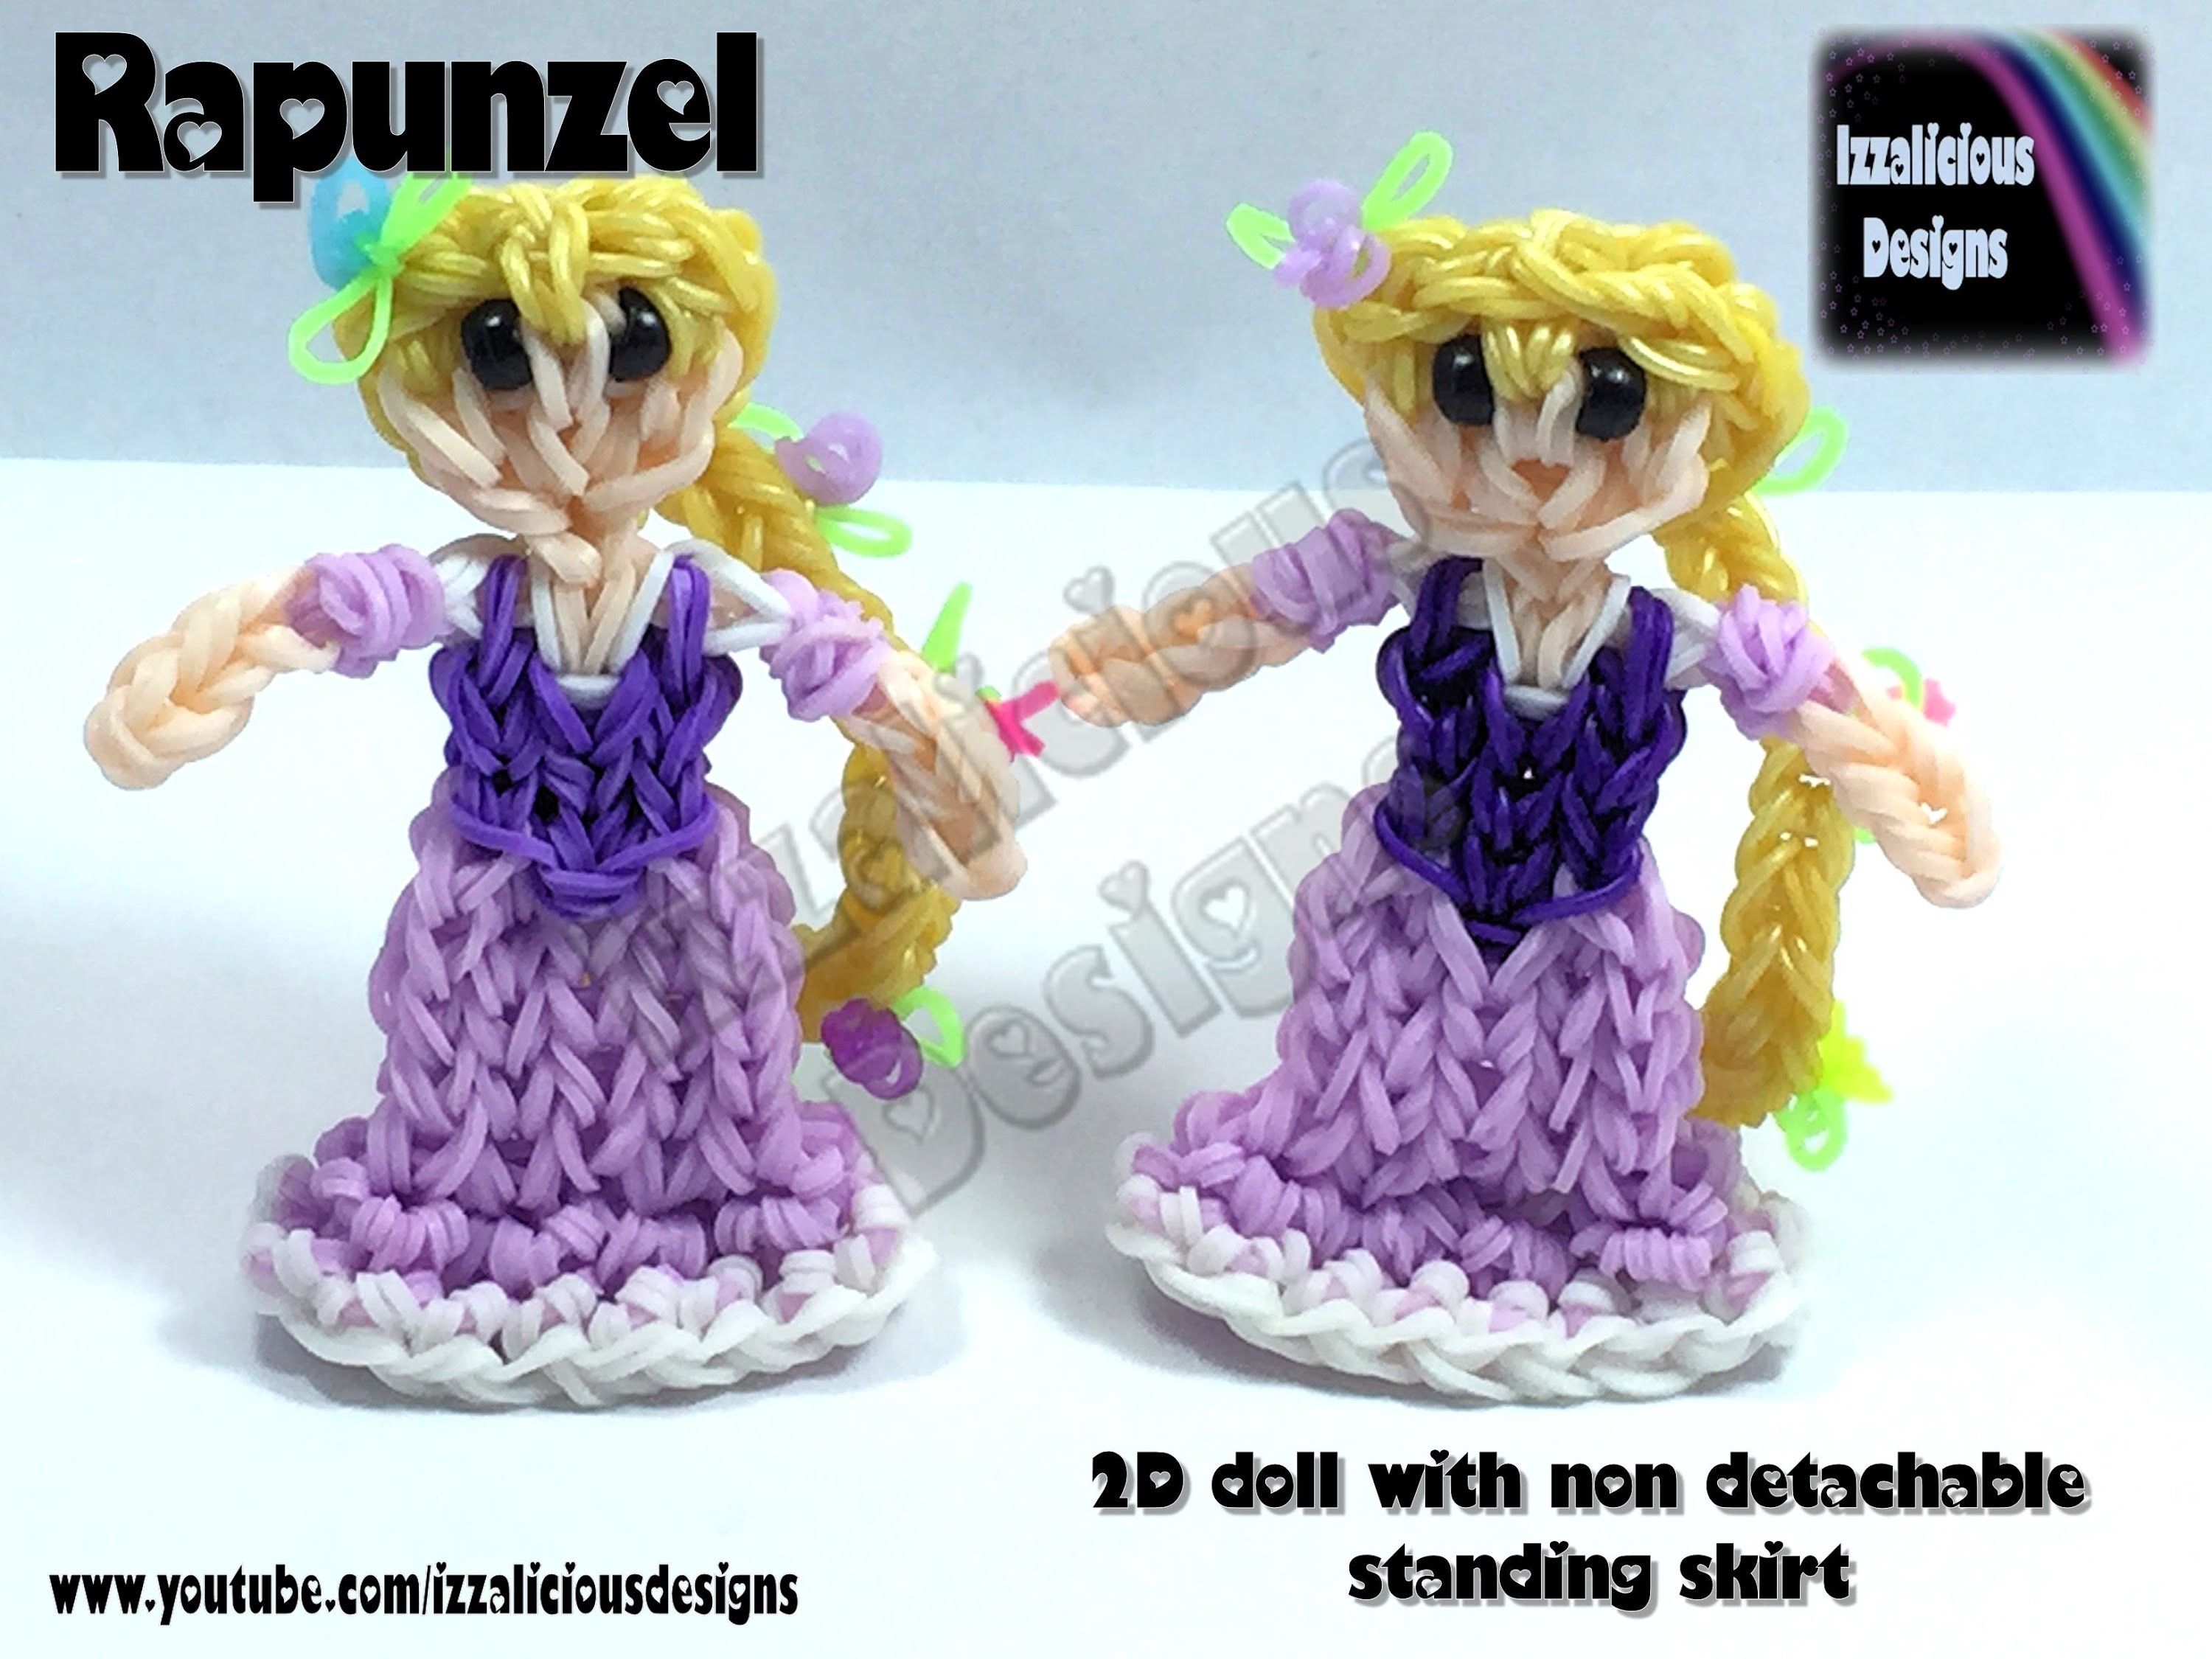 Rainbow Loom Rapunzel.Tangled Princess Action Figure.Charm - 2D ...